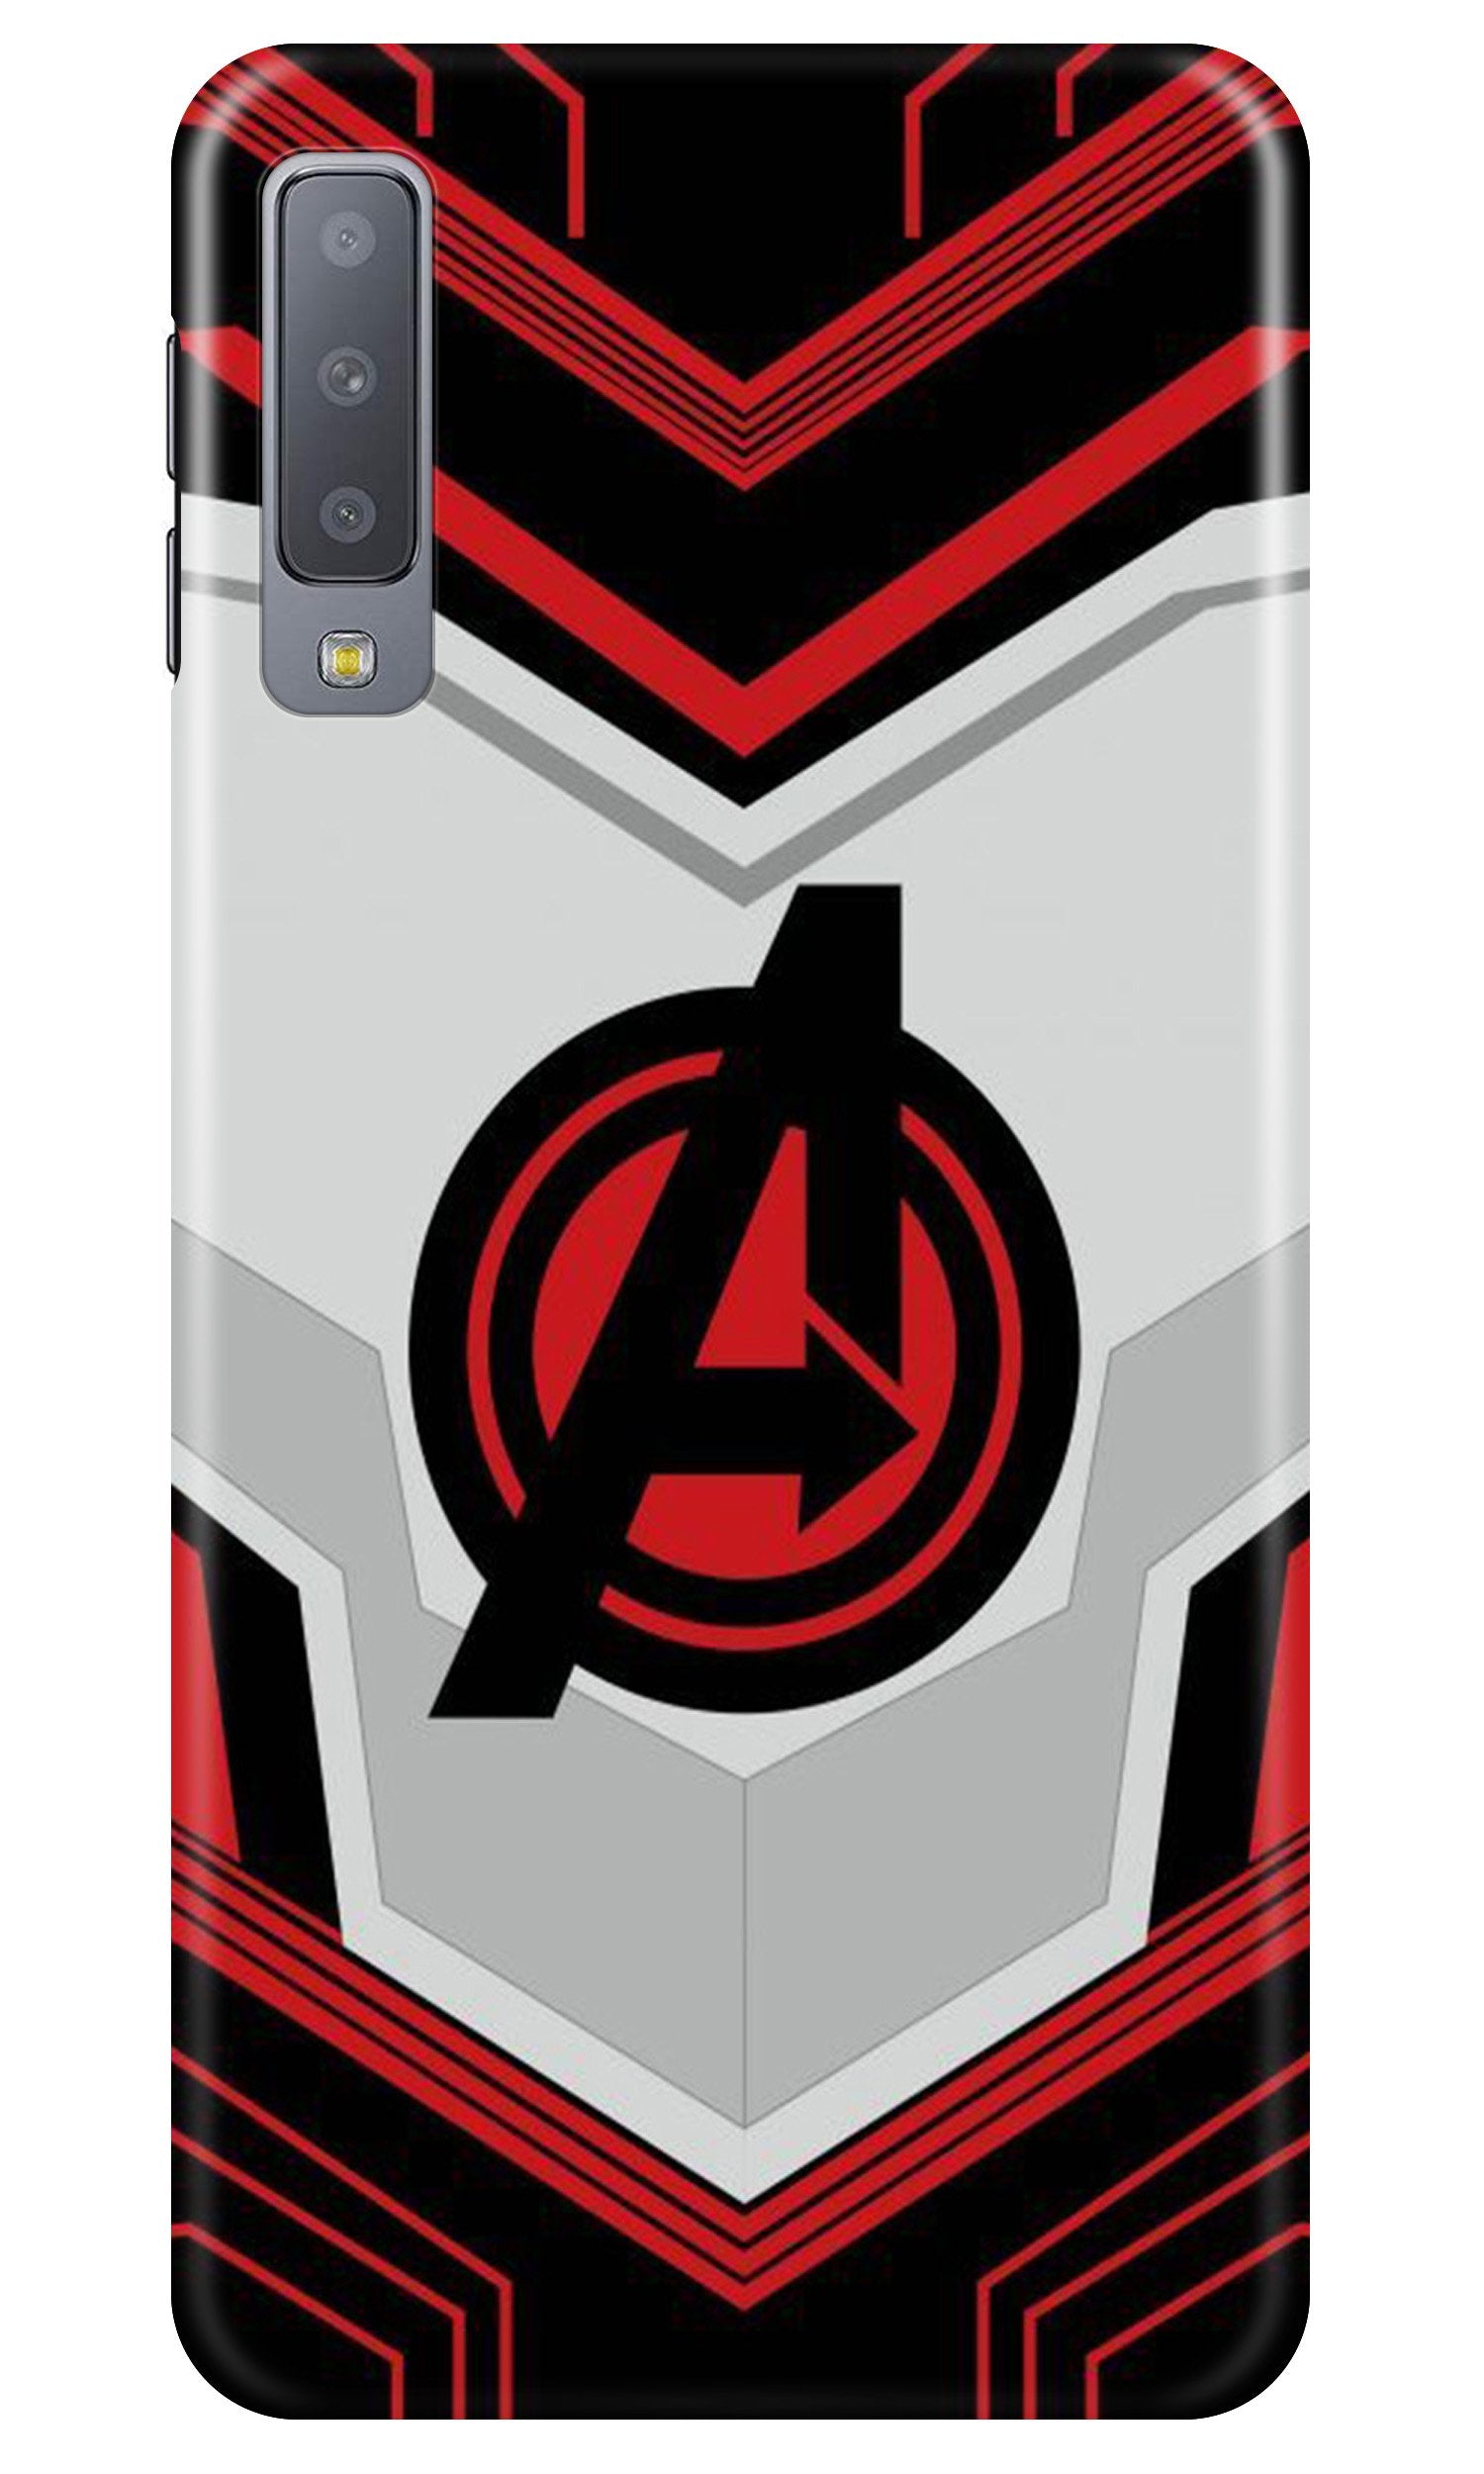 Avengers2 Case for Samung Galaxy A70s (Design No. 255)